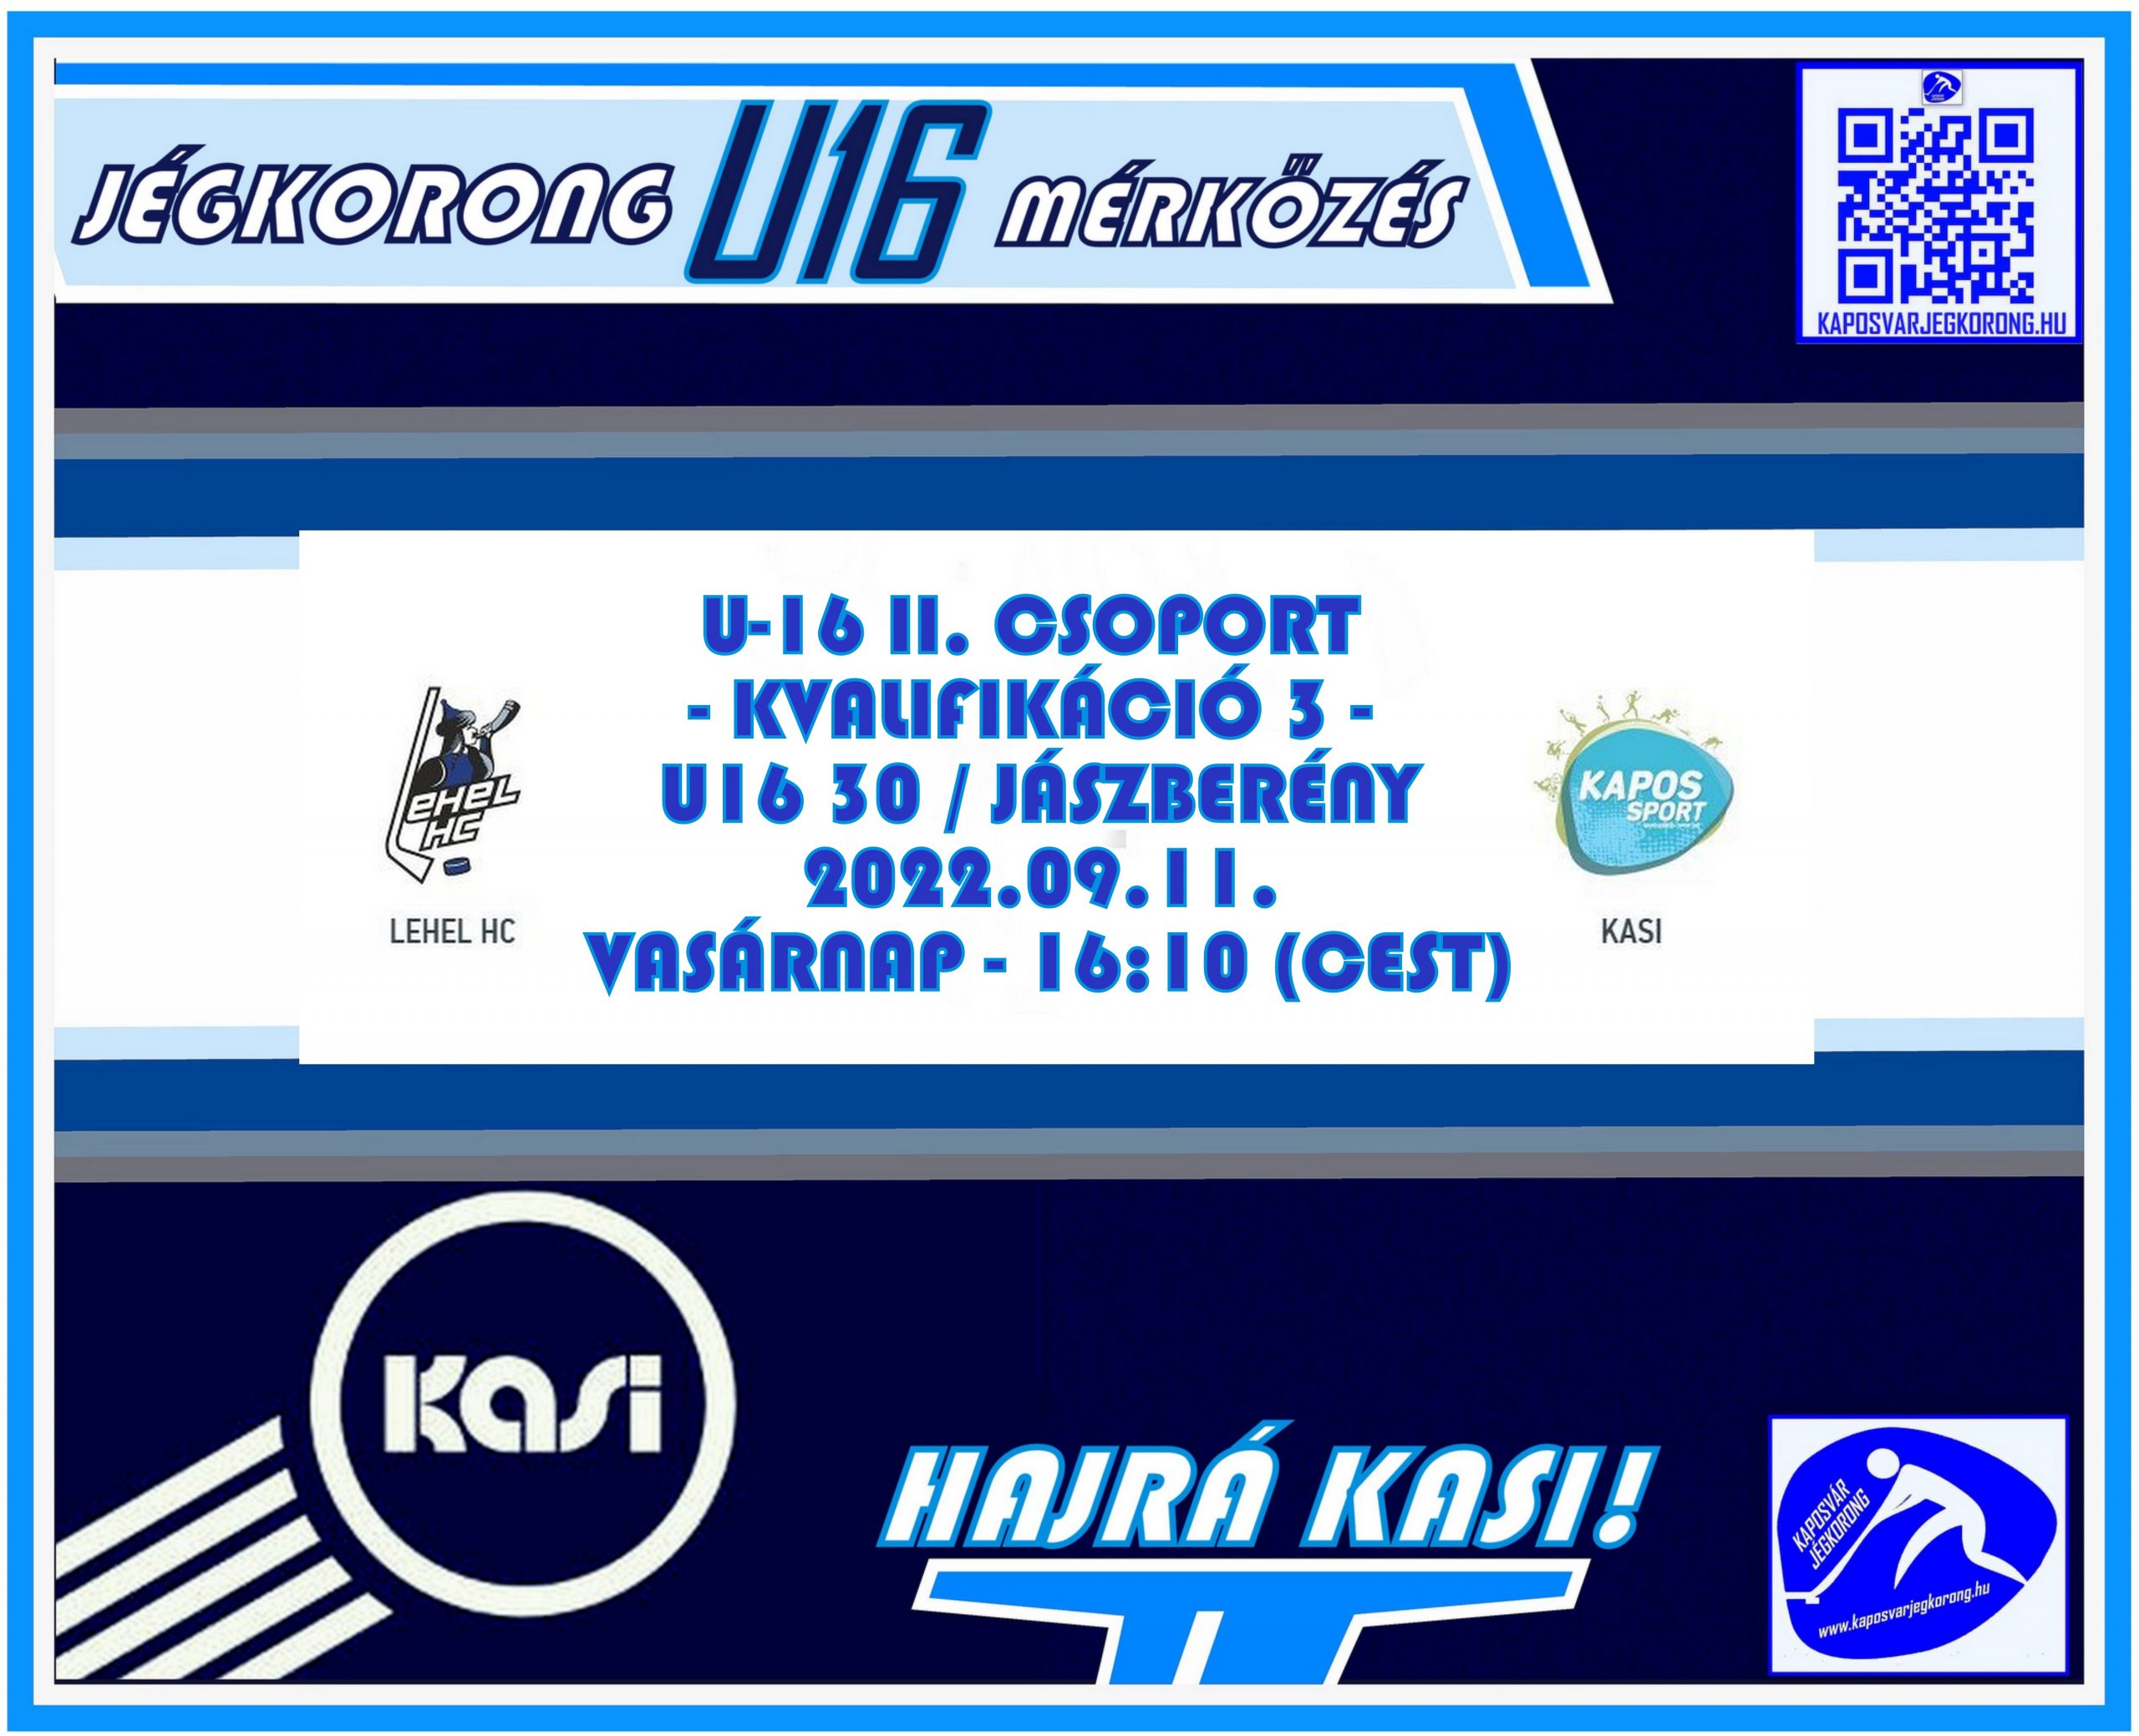 You are currently viewing U16 LEHEL HC – KASI -JÉGKORONG MÉRKŐZÉS 2022.09.11.